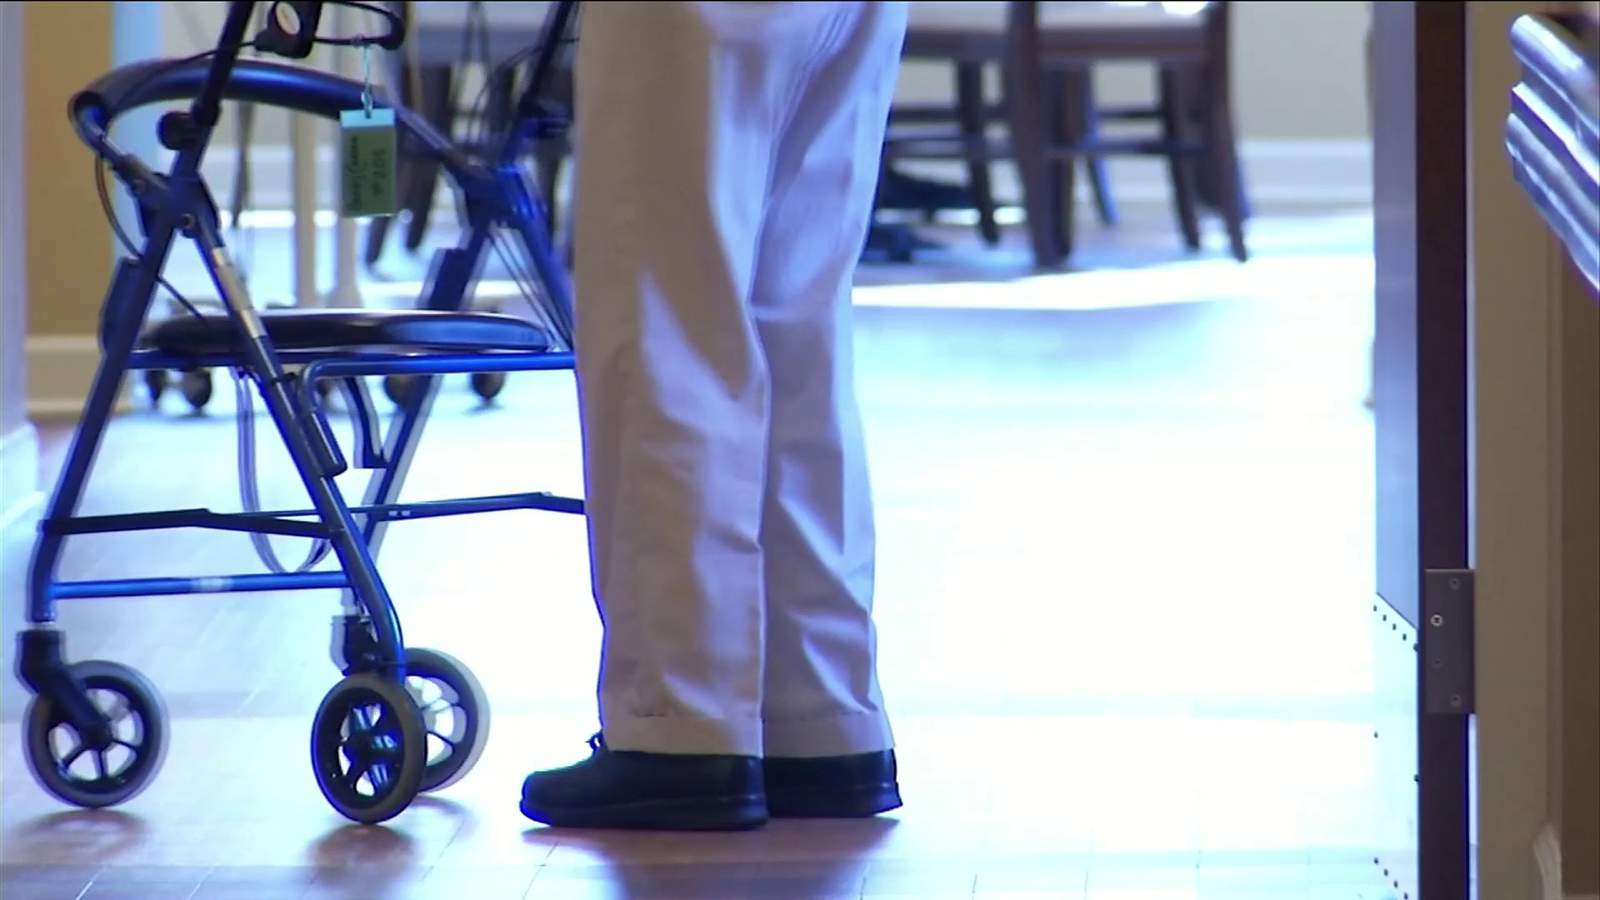 Florida House eyes cuts for nursing homes, hospitals